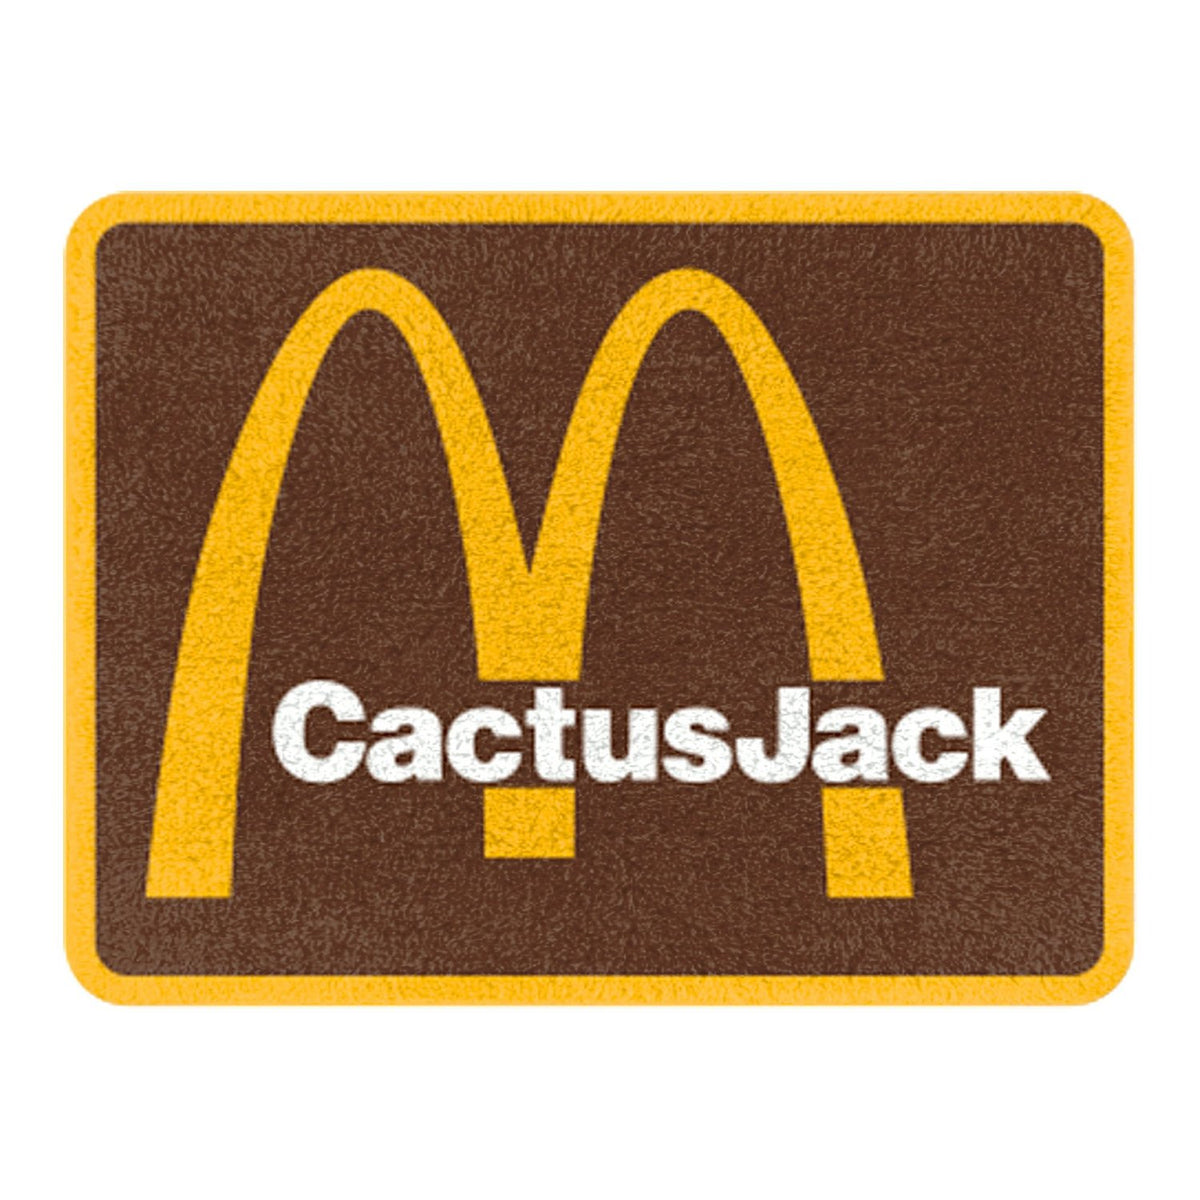 LA COLLAB' CACTUS JACK MCDONALD'S 🌵 – MYSTERY BOX SHOP